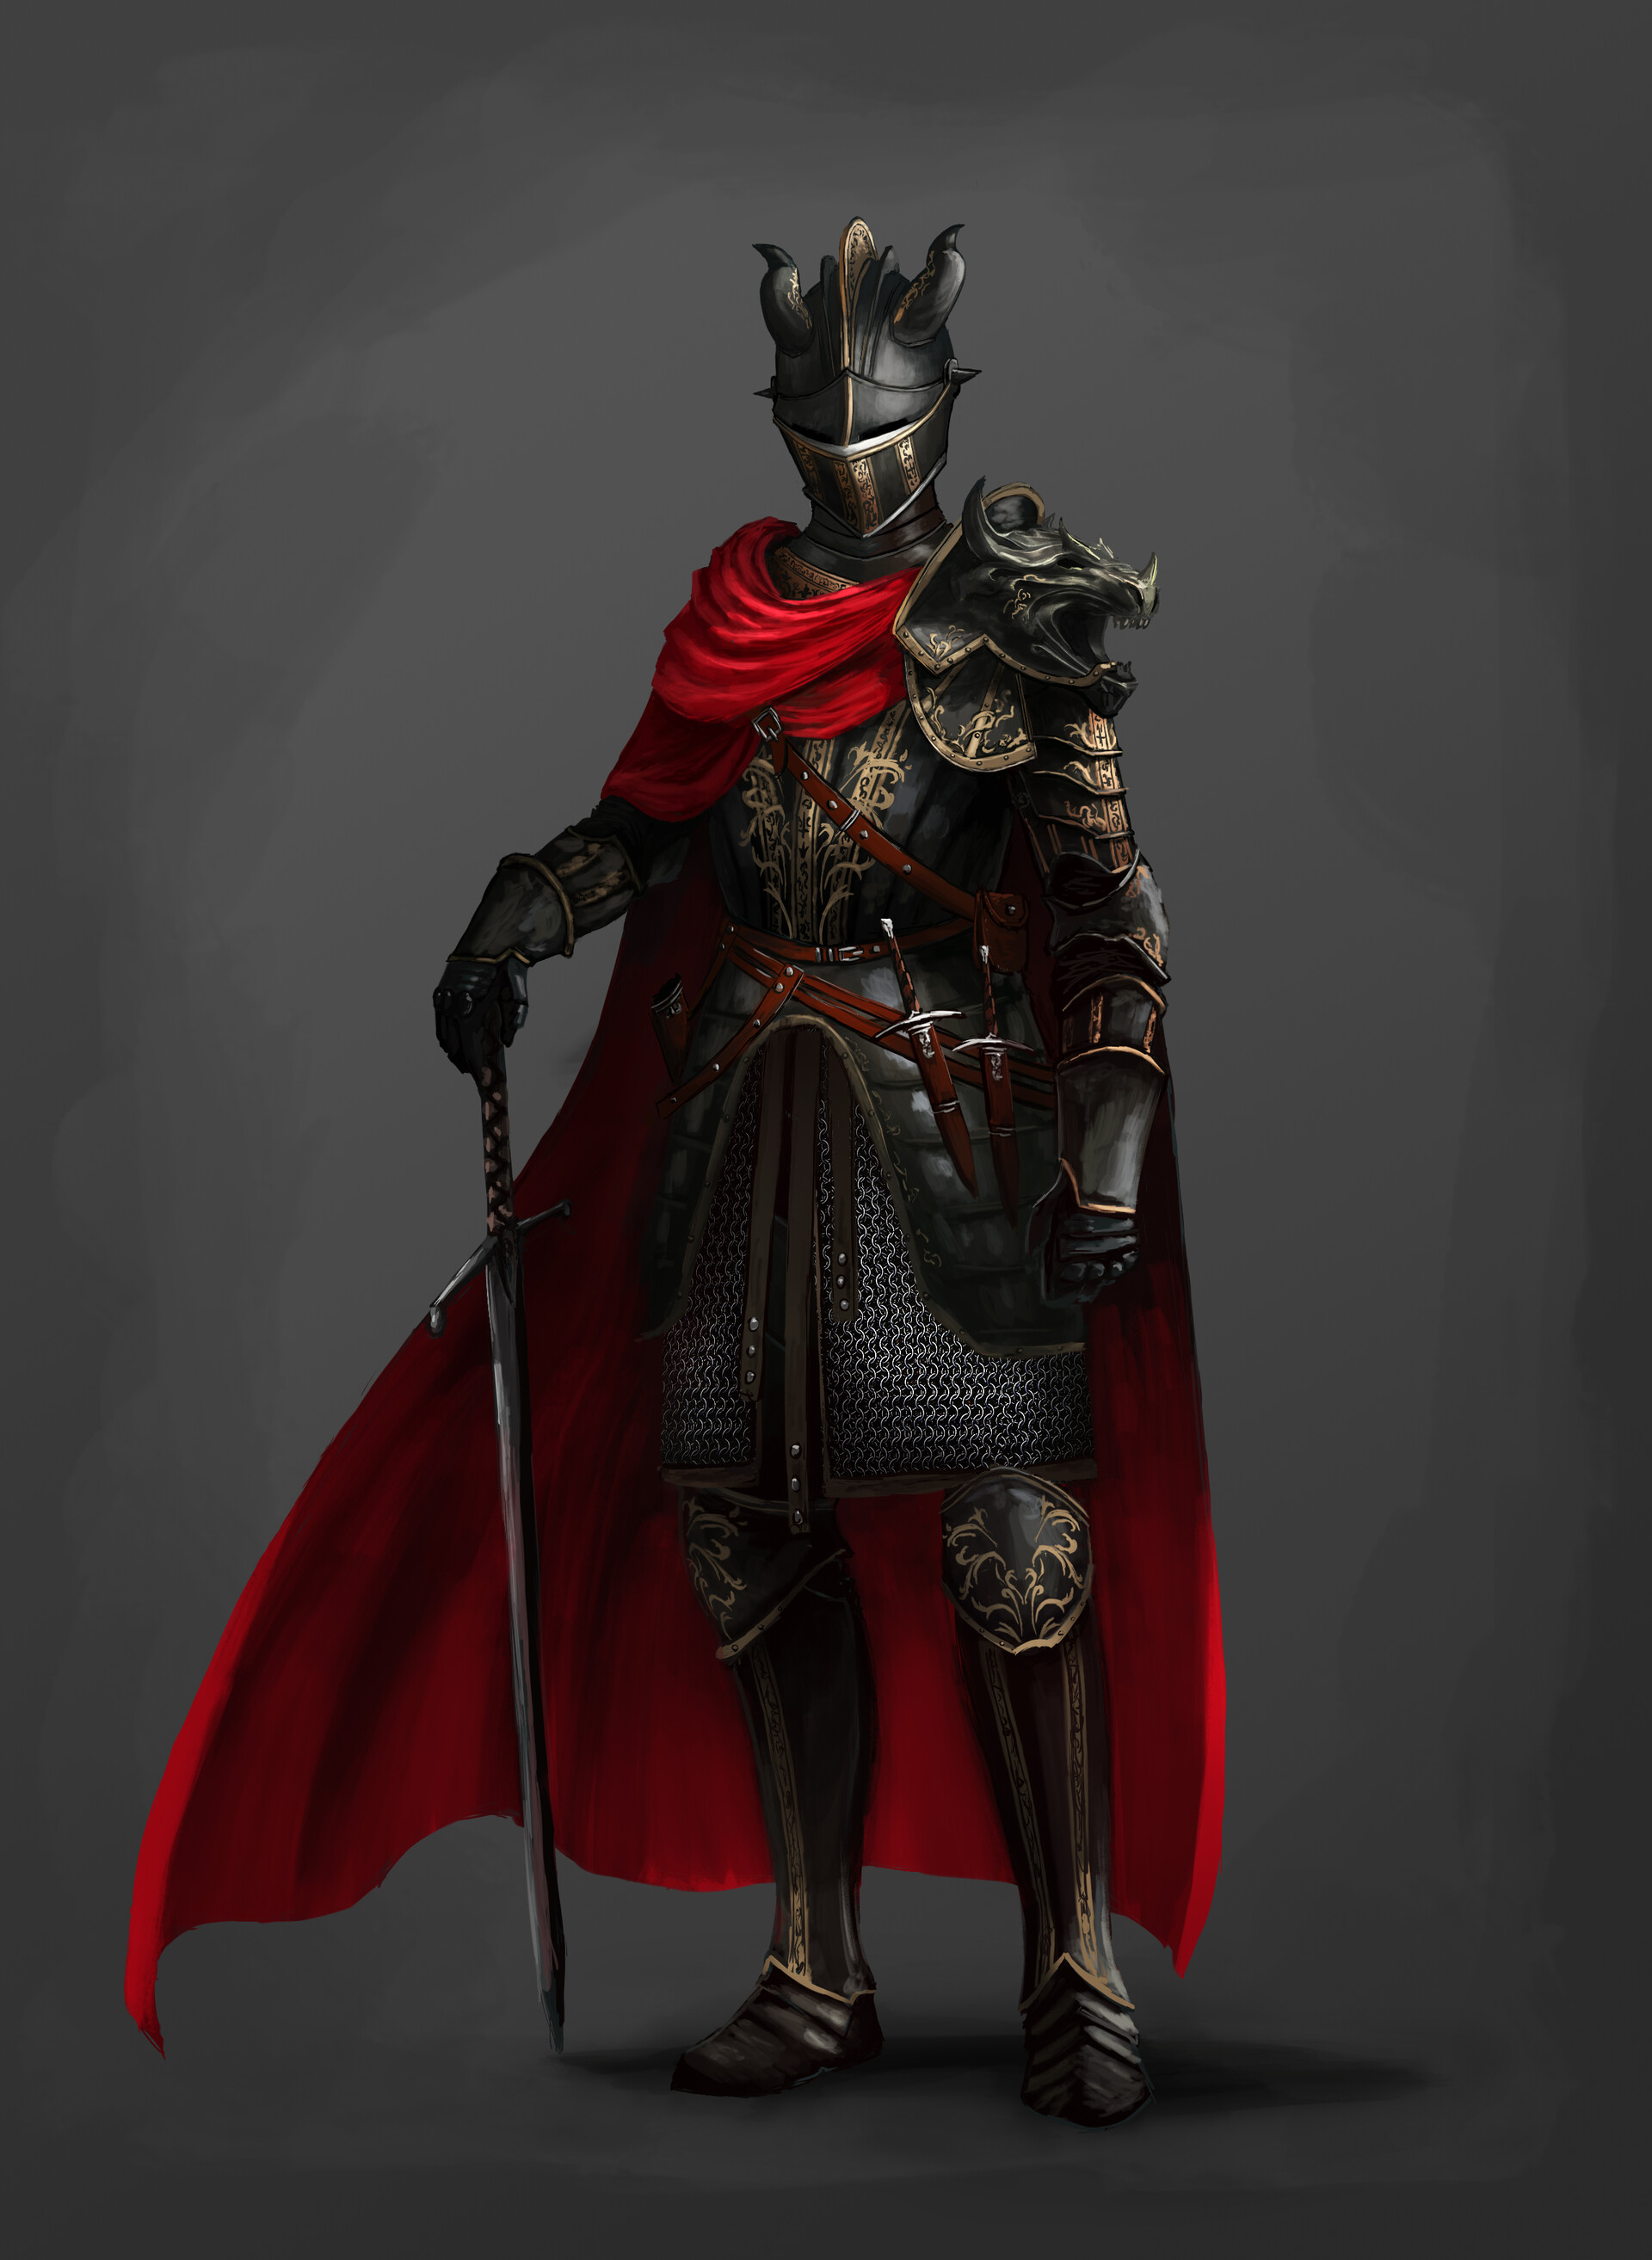 defile biograf af Ricardo Herrera - Concept: Knight in black armor